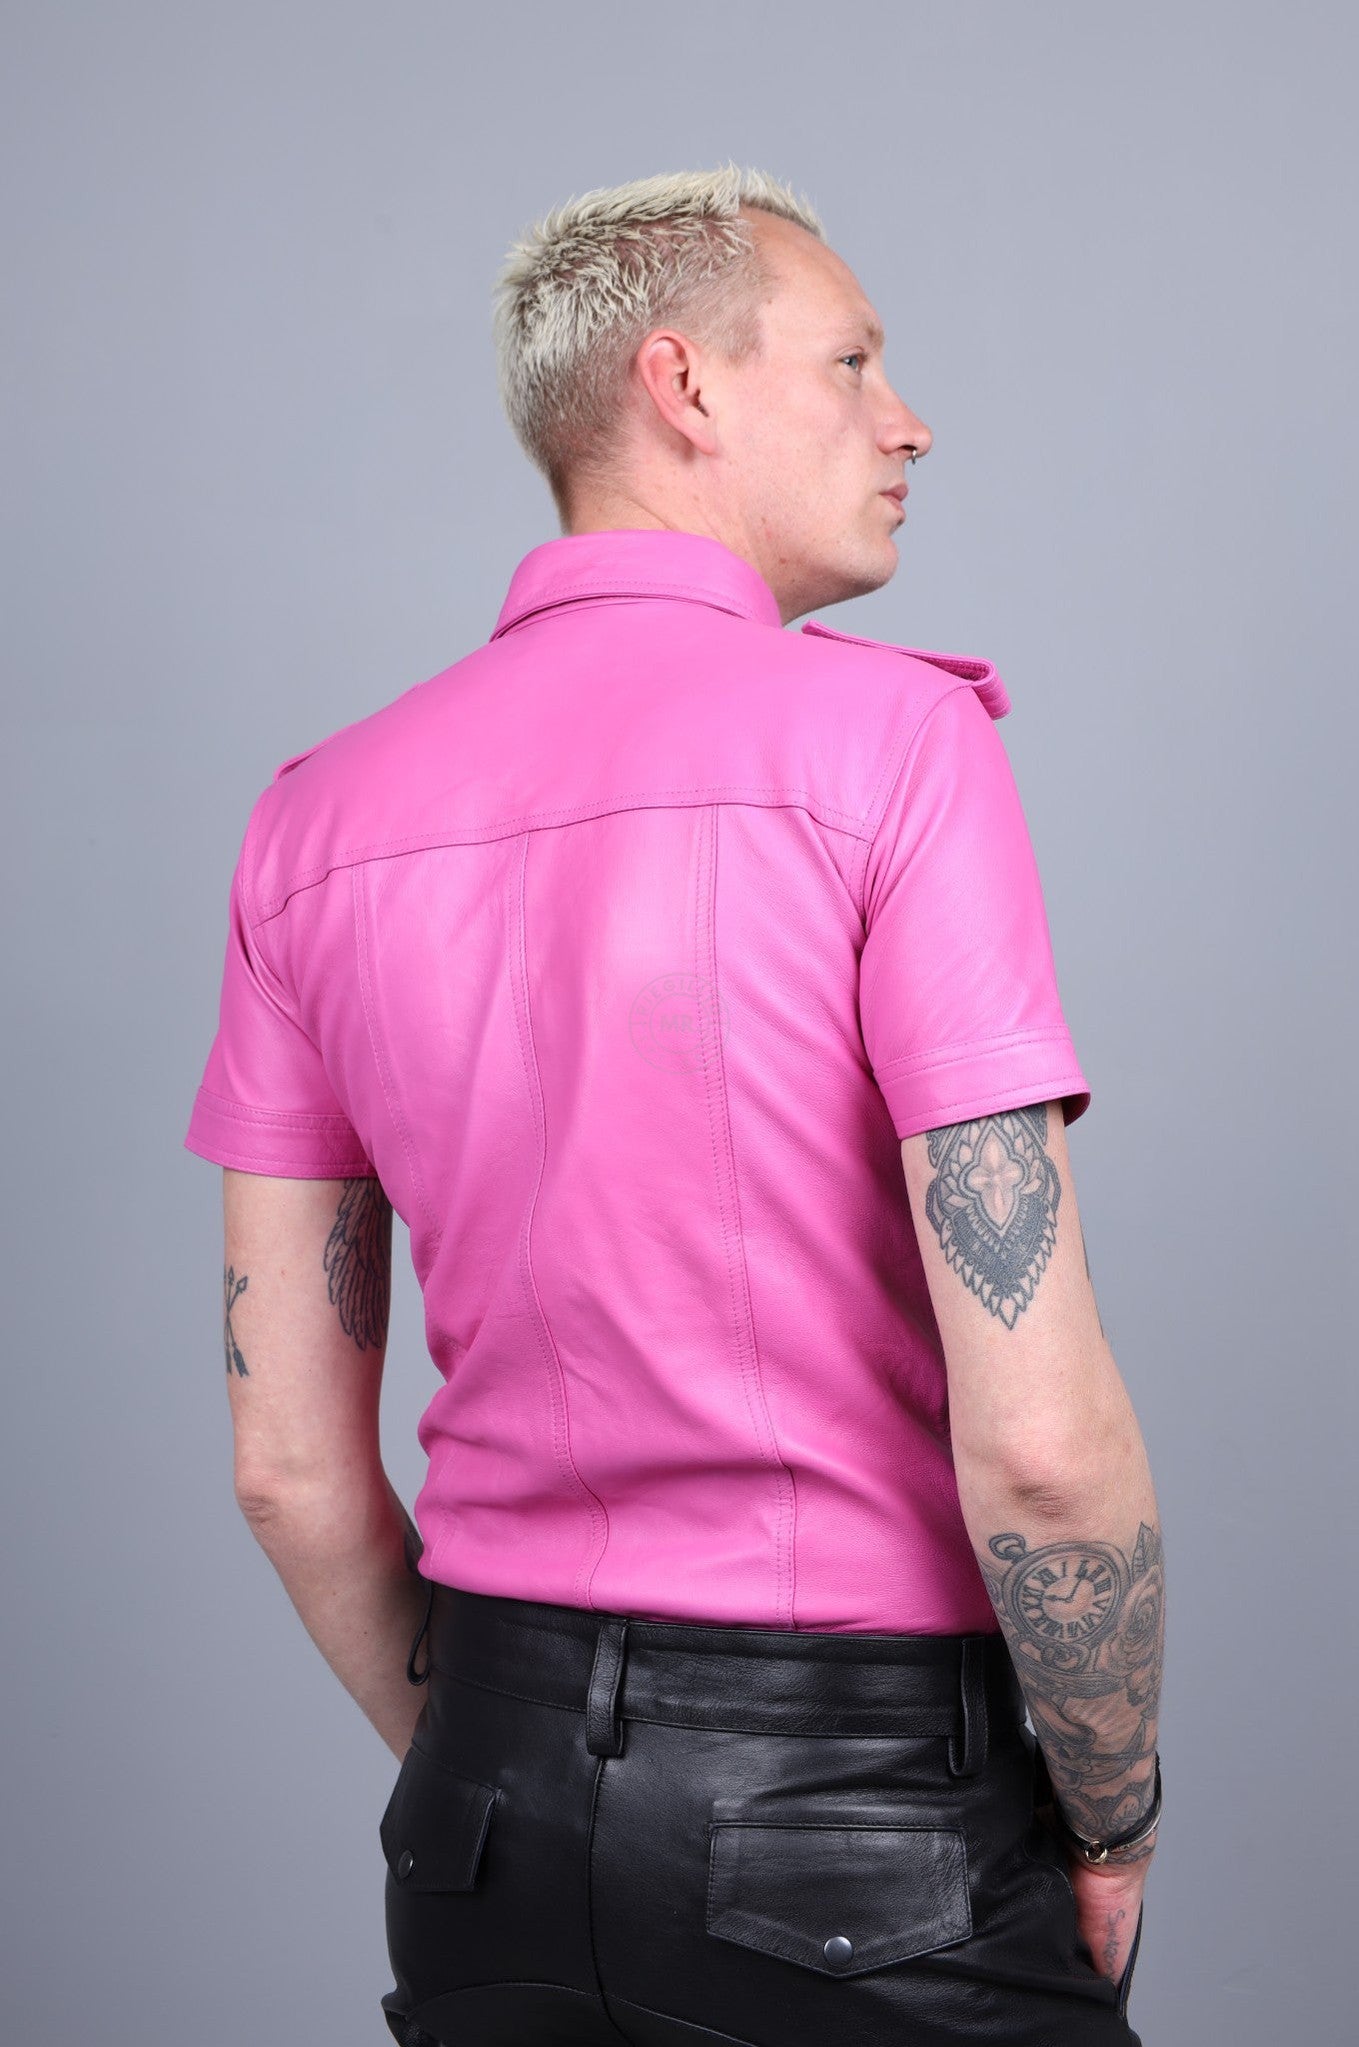 Bright Pink Leather Shirt at MR. Riegillio